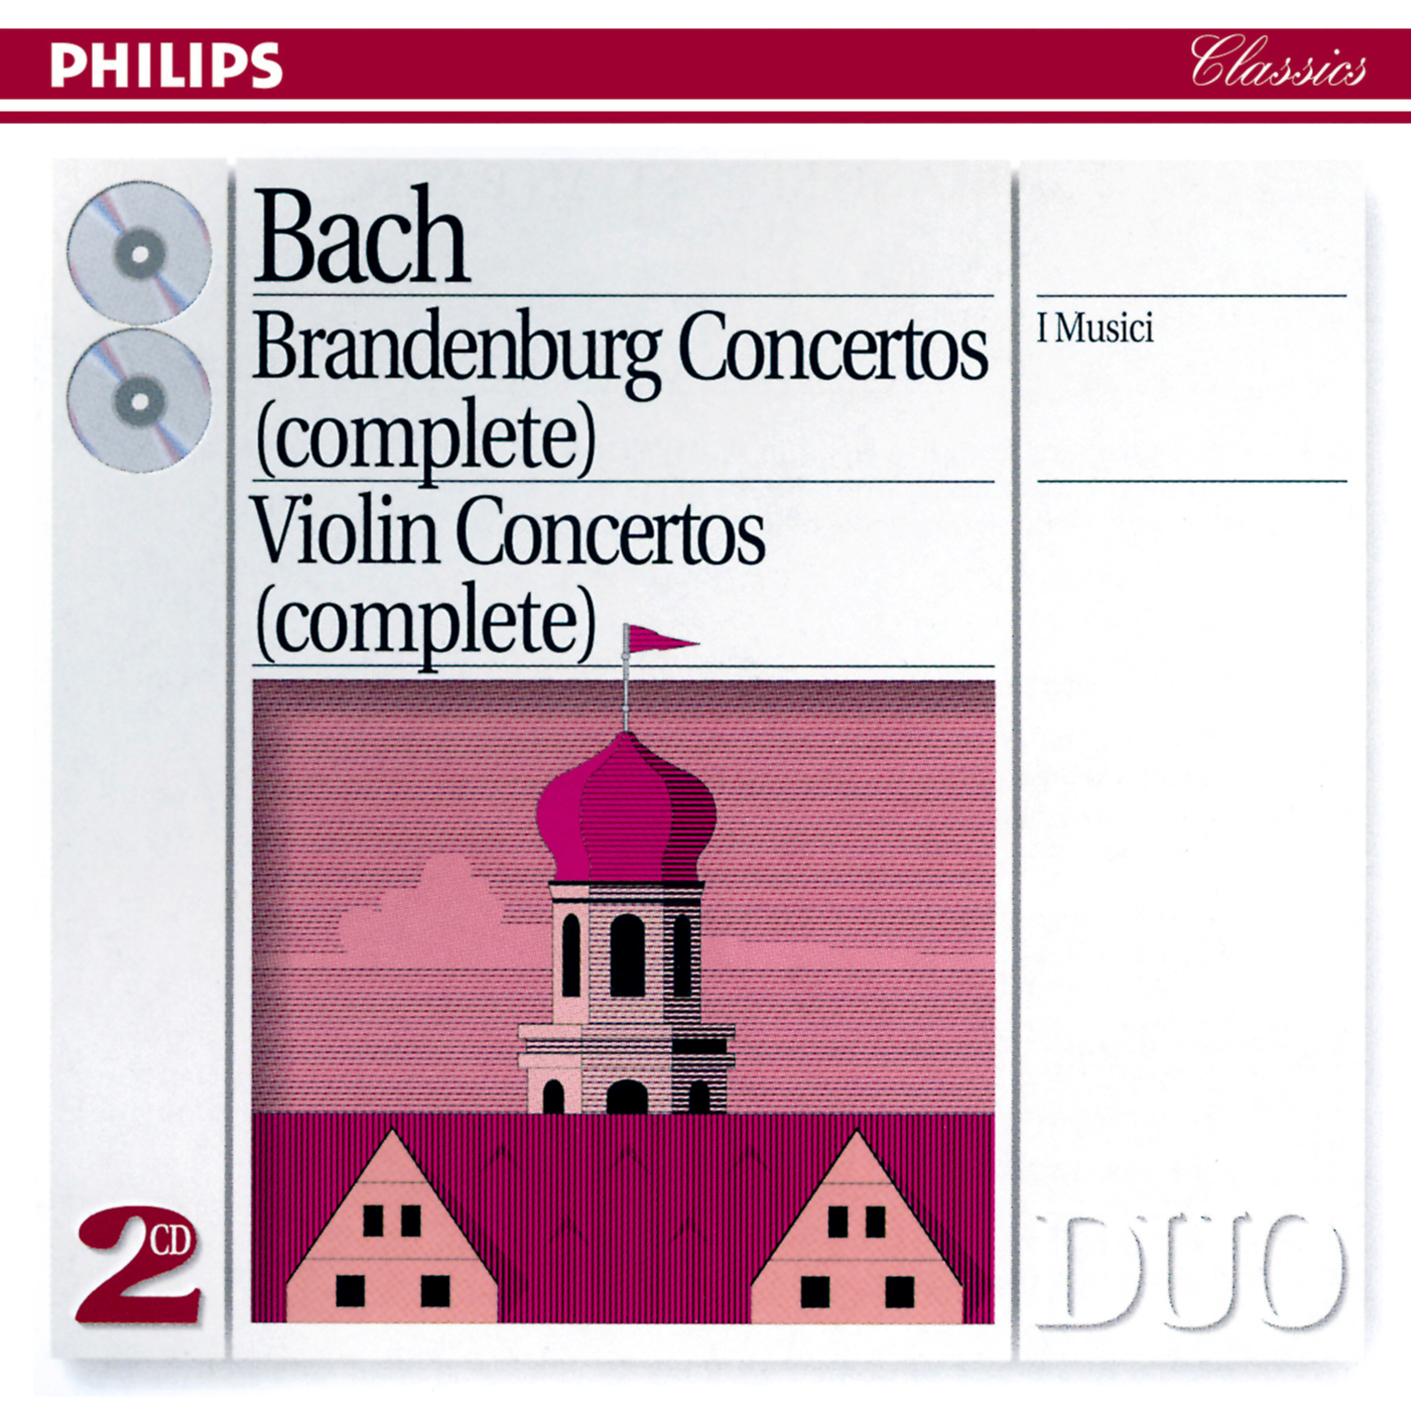 I Musici - Brandenburg Concerto No.5 in D, BWV 1050:2. Affetuoso